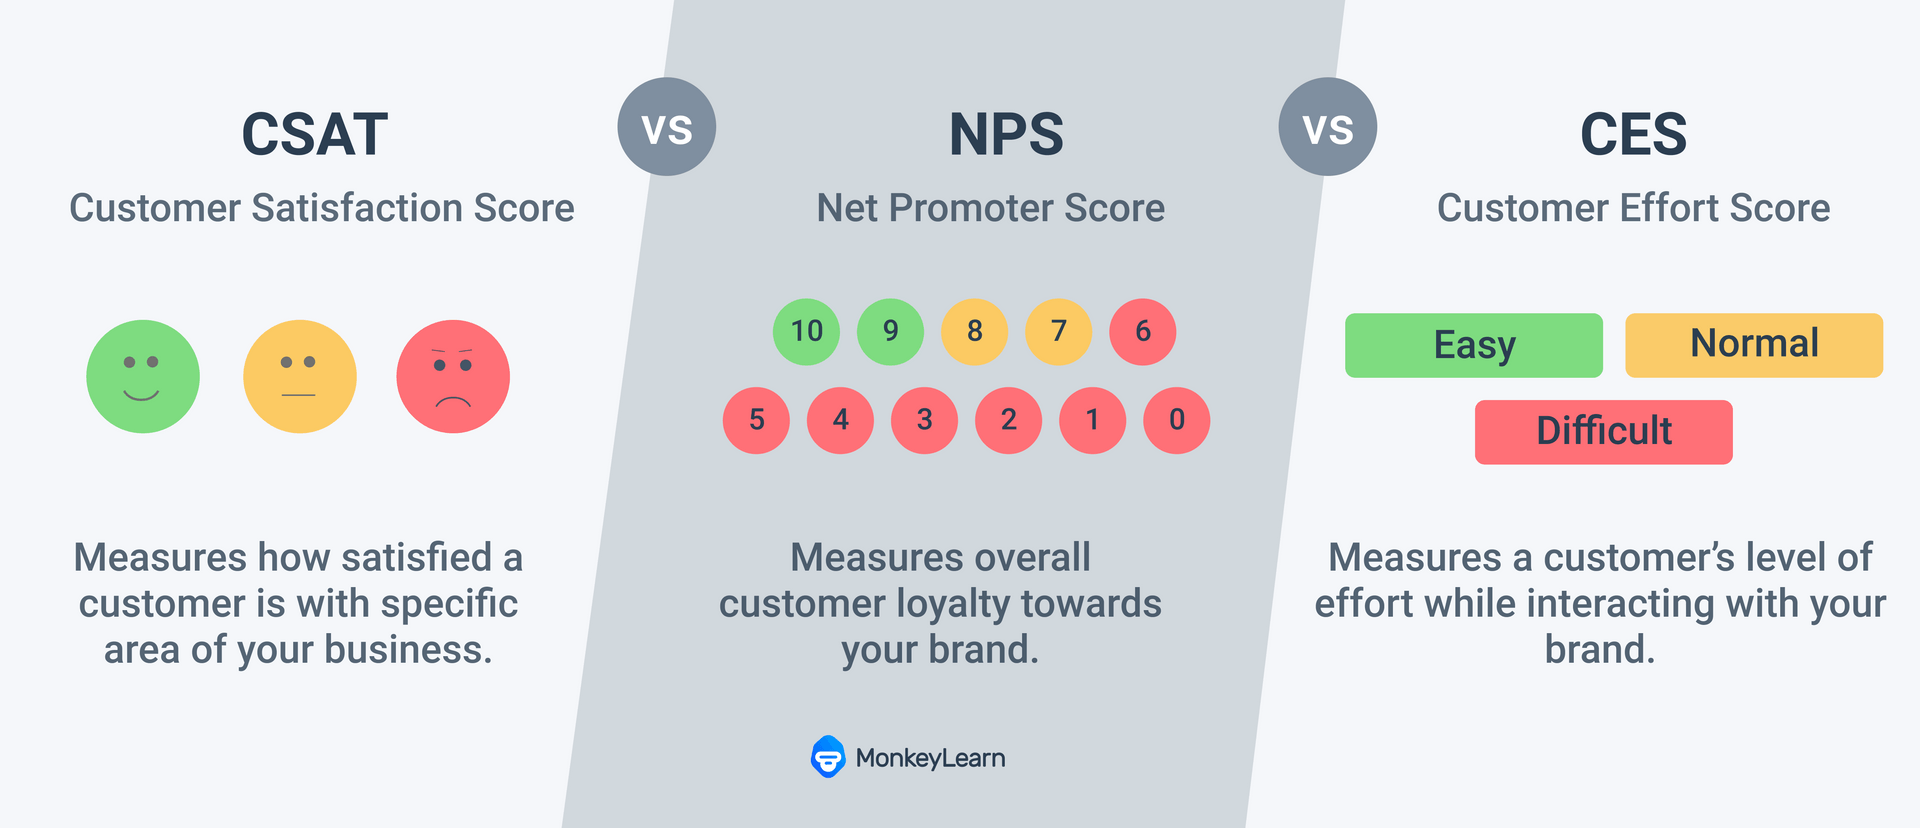 CSAT measures satisfaction vs NPS measures loyalty vs CES measures customer effort.